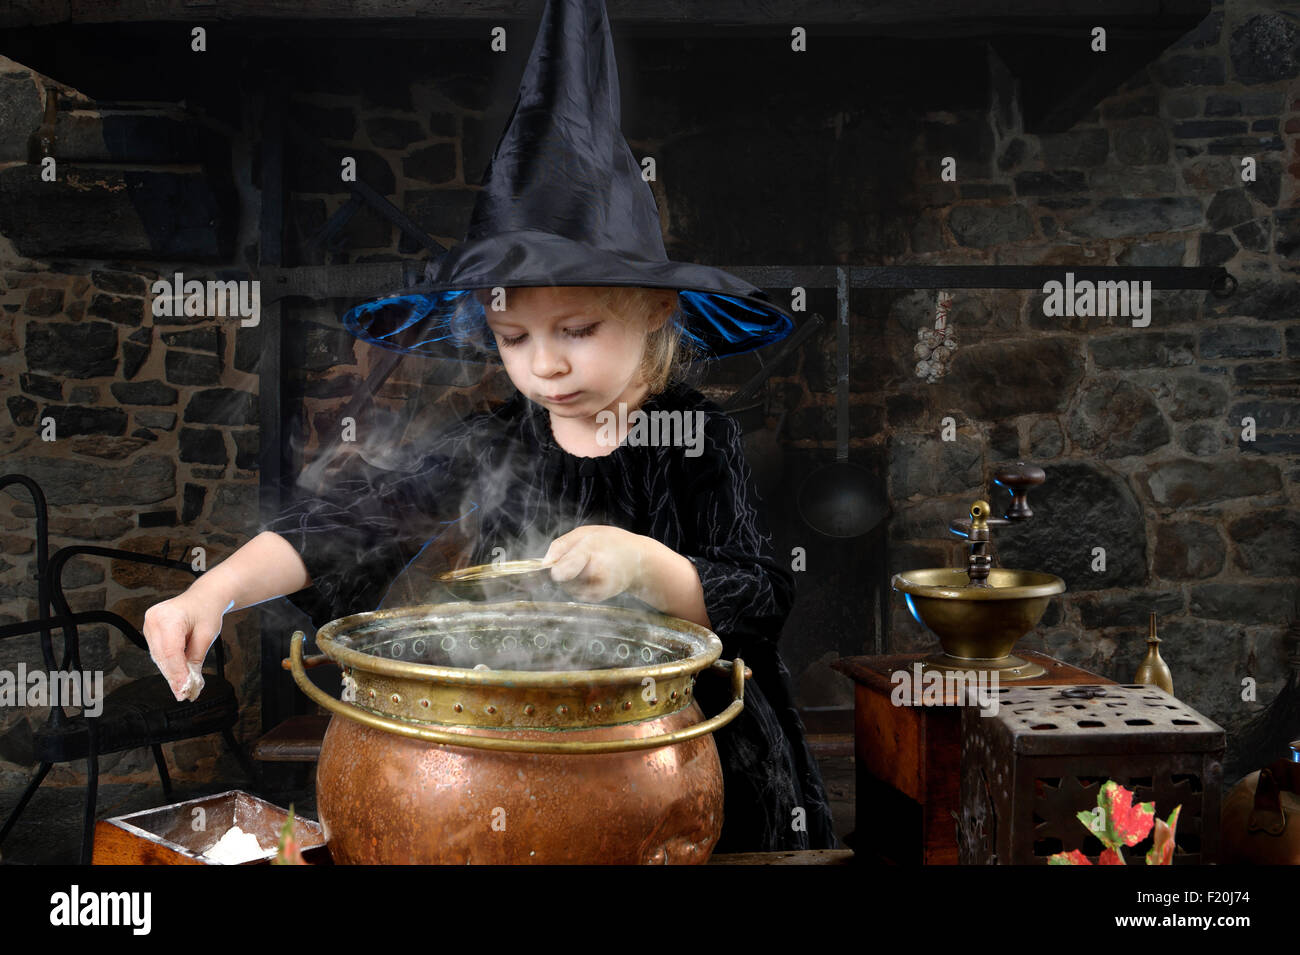 https://c8.alamy.com/compes/f20j74/pequena-bruja-de-halloween-con-caldero-en-una-antigua-cocina-f20j74.jpg